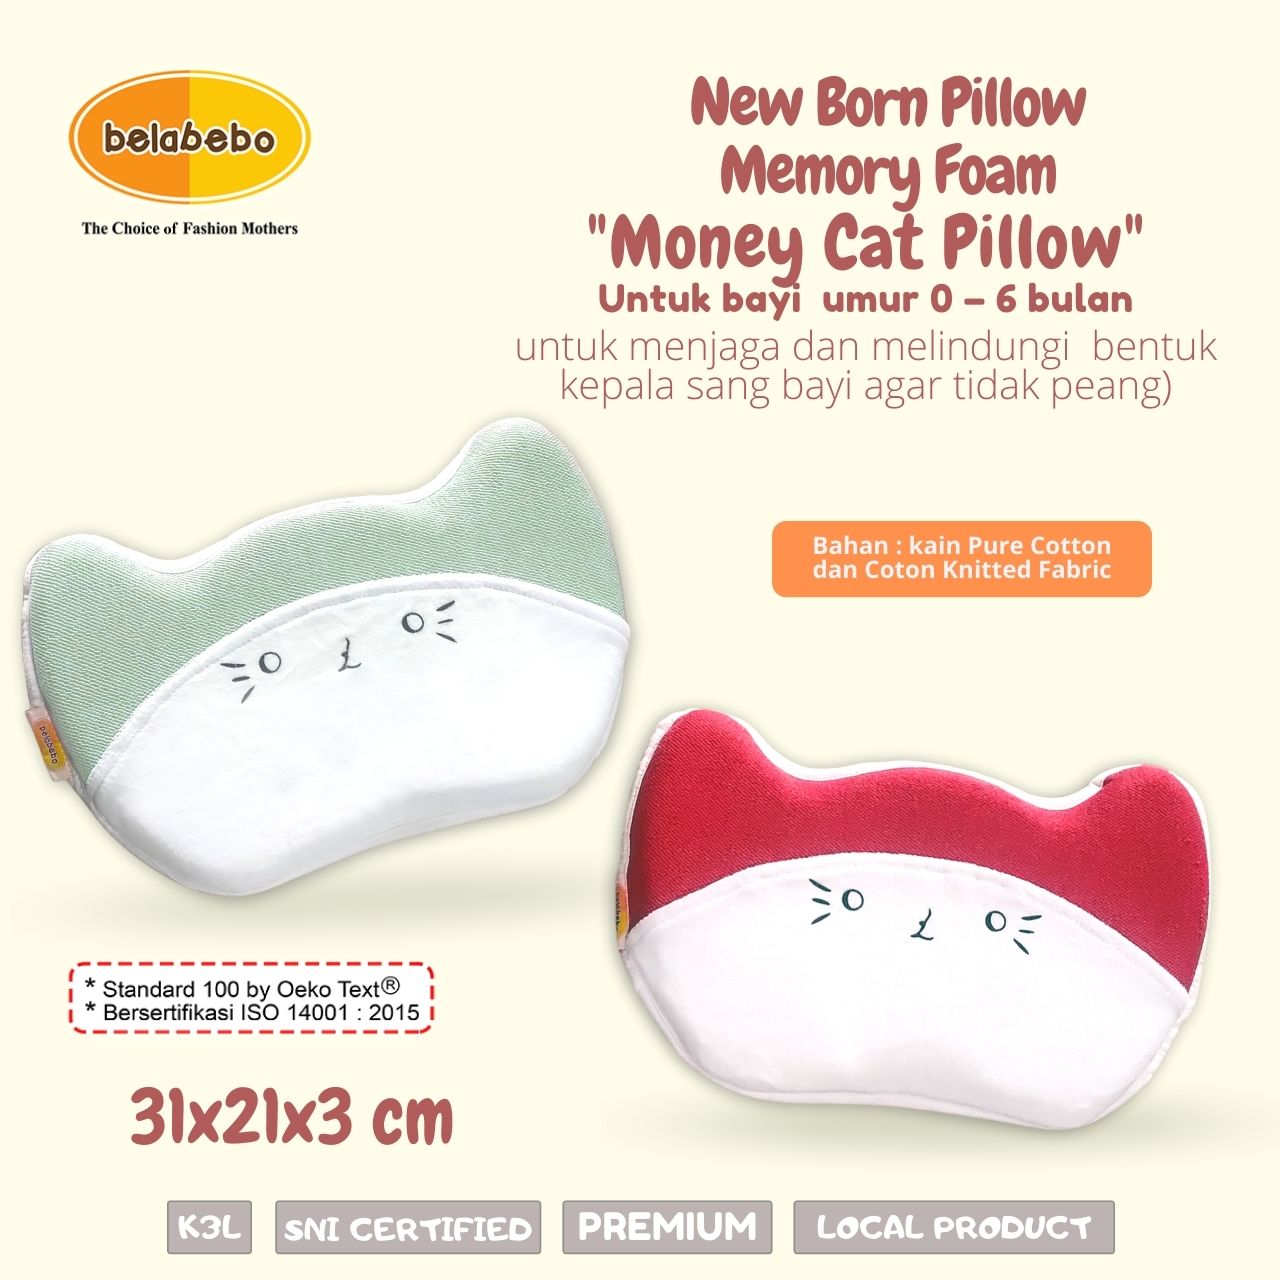 New Born Pillow Money Cat Pillow Ukuran Belabebo